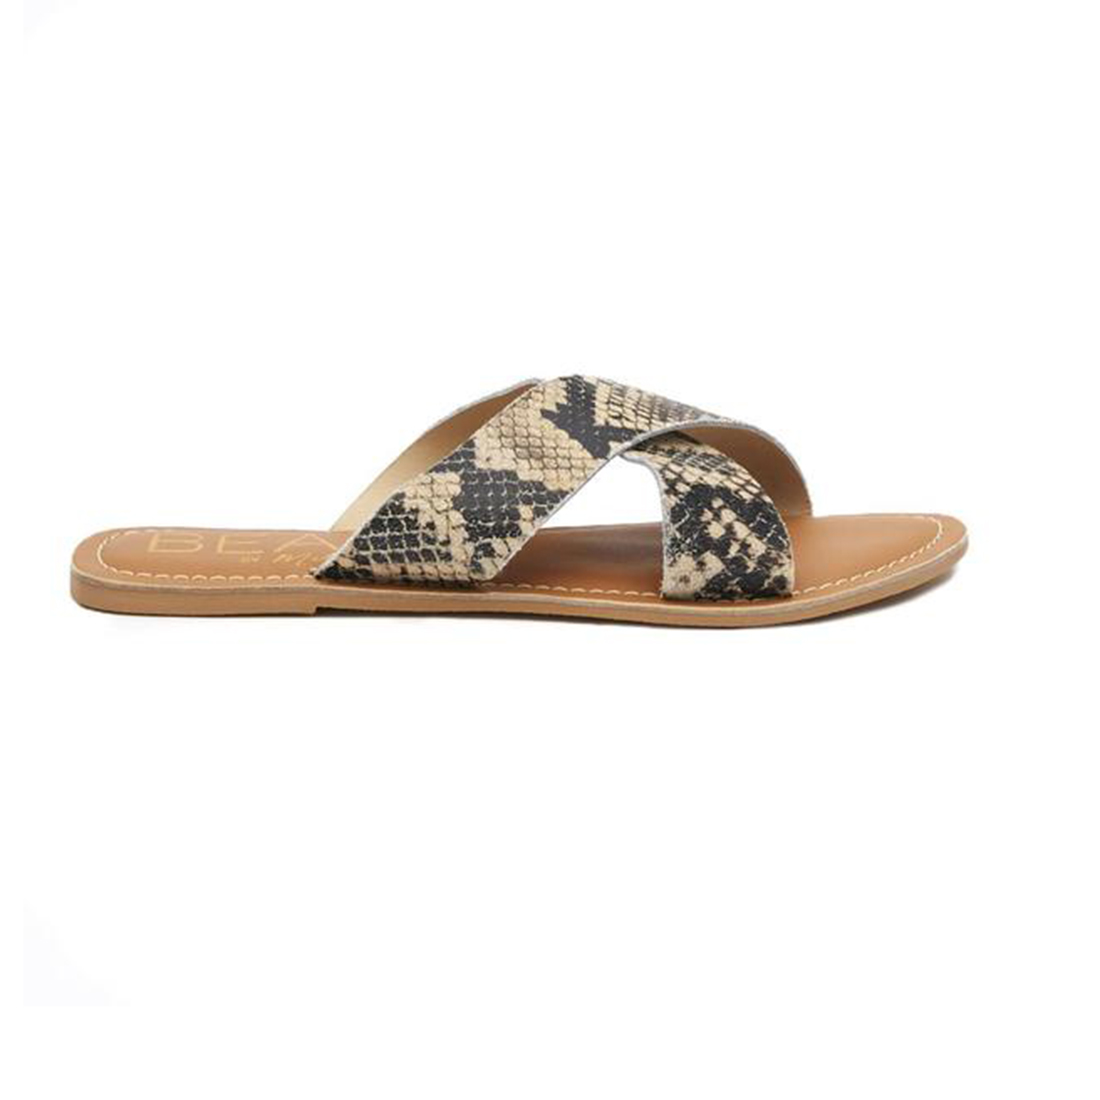 matisse coconuts pebble sandal in natural multi snake 85262